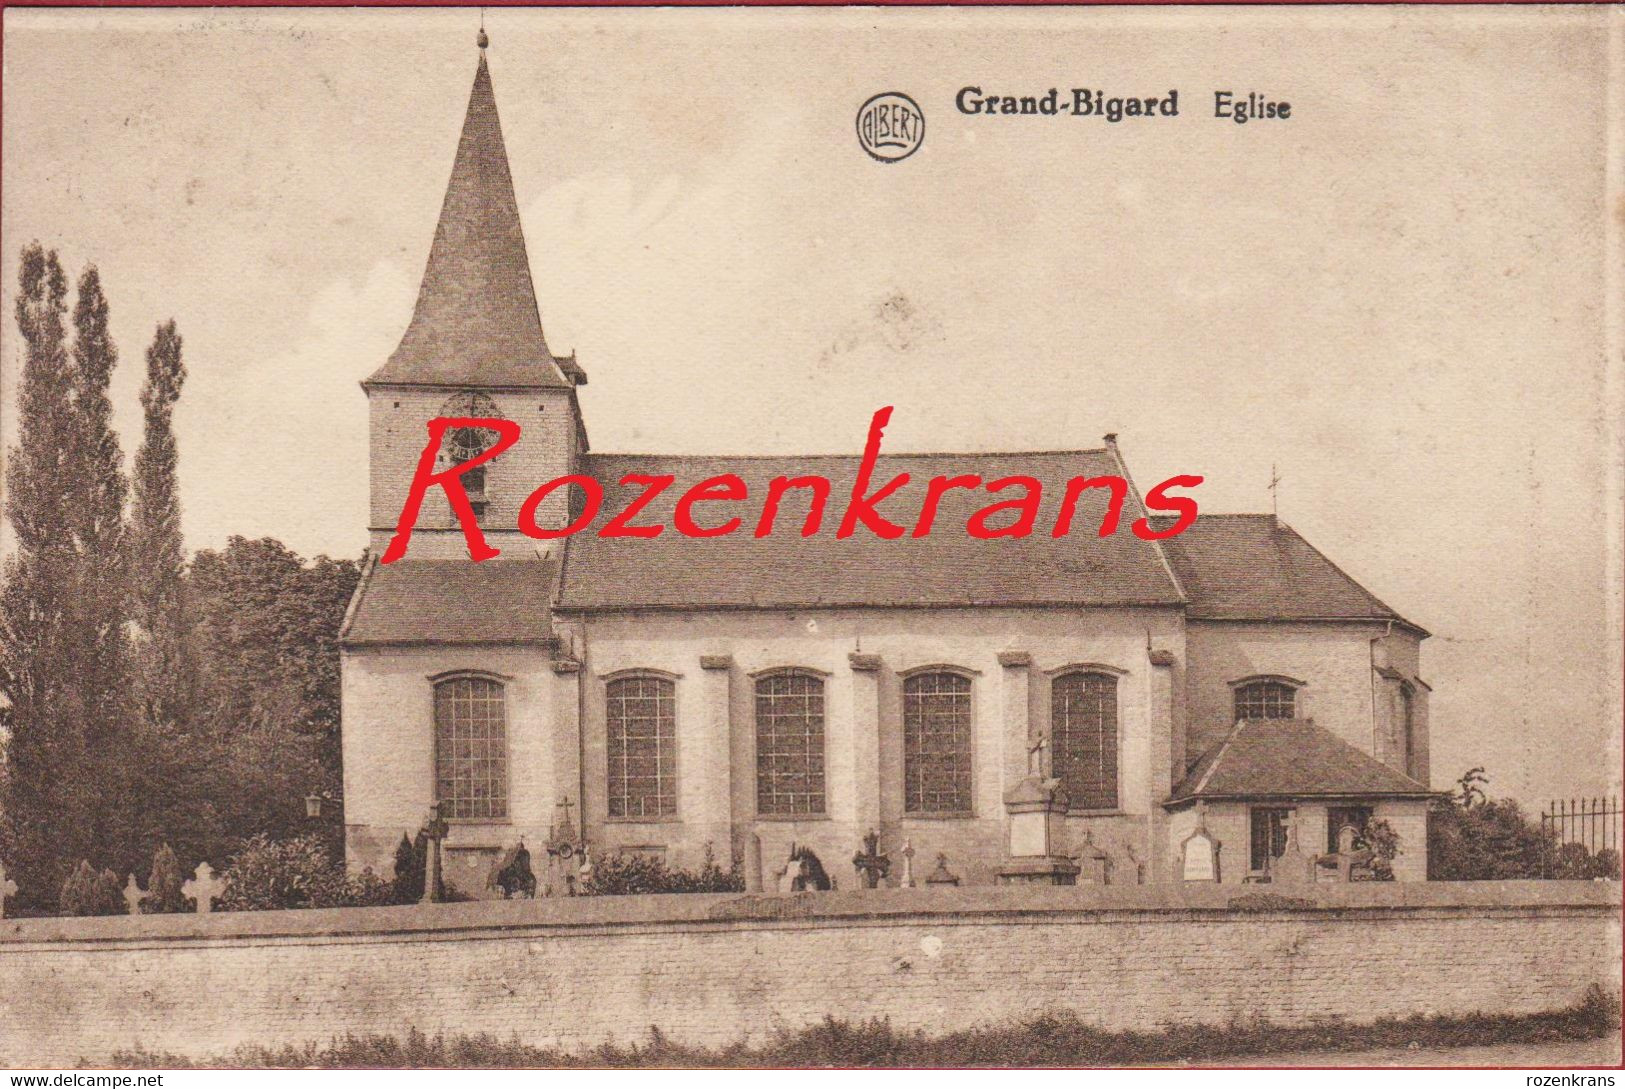 Groot-Bijgaarden Grand-Bigard Eglise ZELDZAAM Sint-Egidiuskerk Pajottenland - Dilbeek